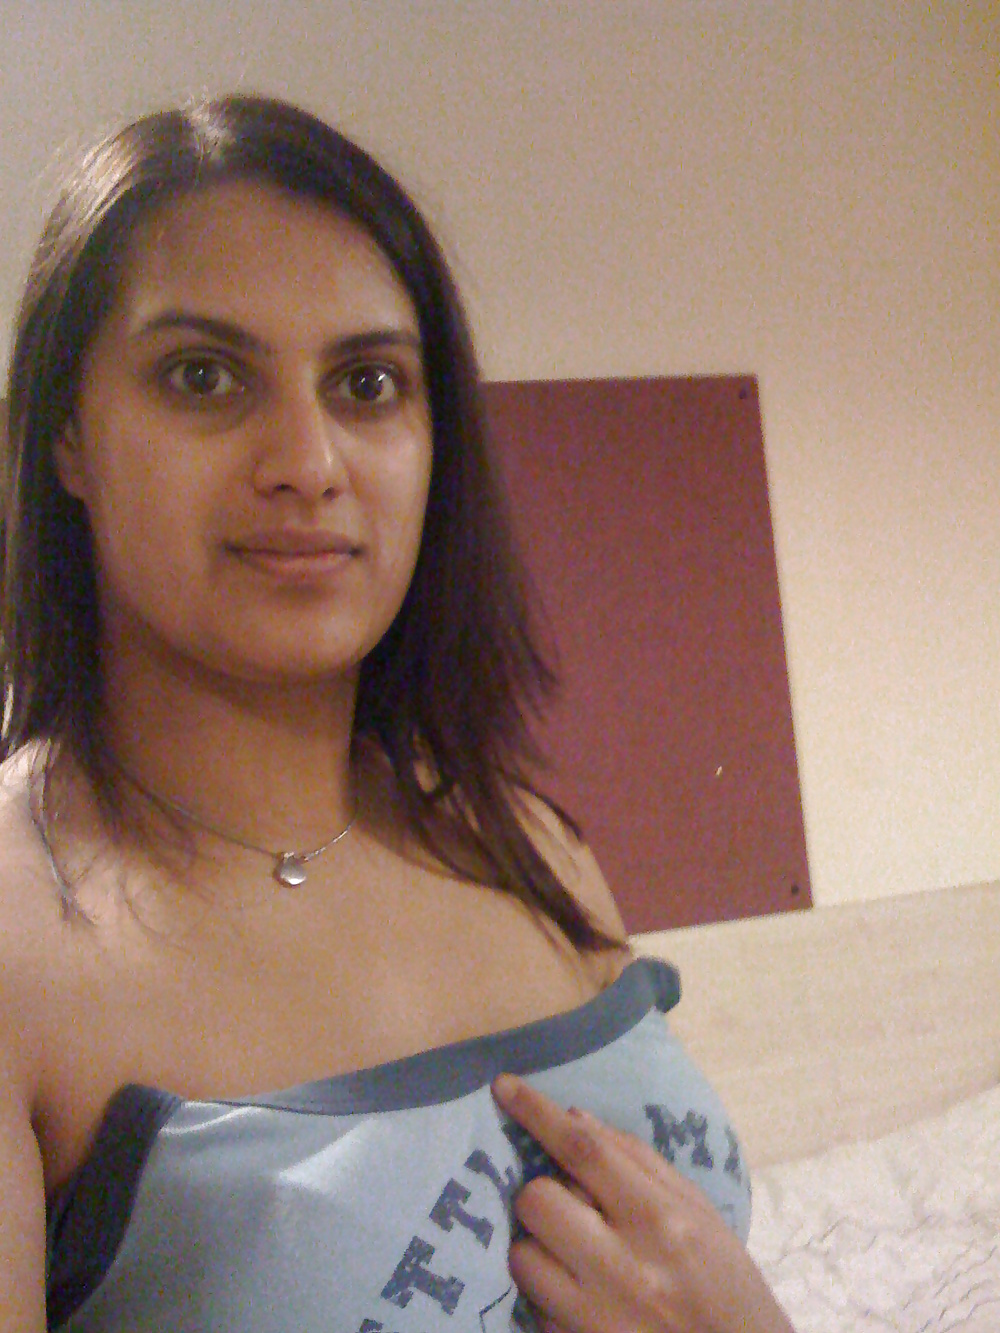 Hot Chubby Indian Nude - b1 â€“ Indian Girls Club â€“ Nude Indian Girls & Hot Sexy Indian ...